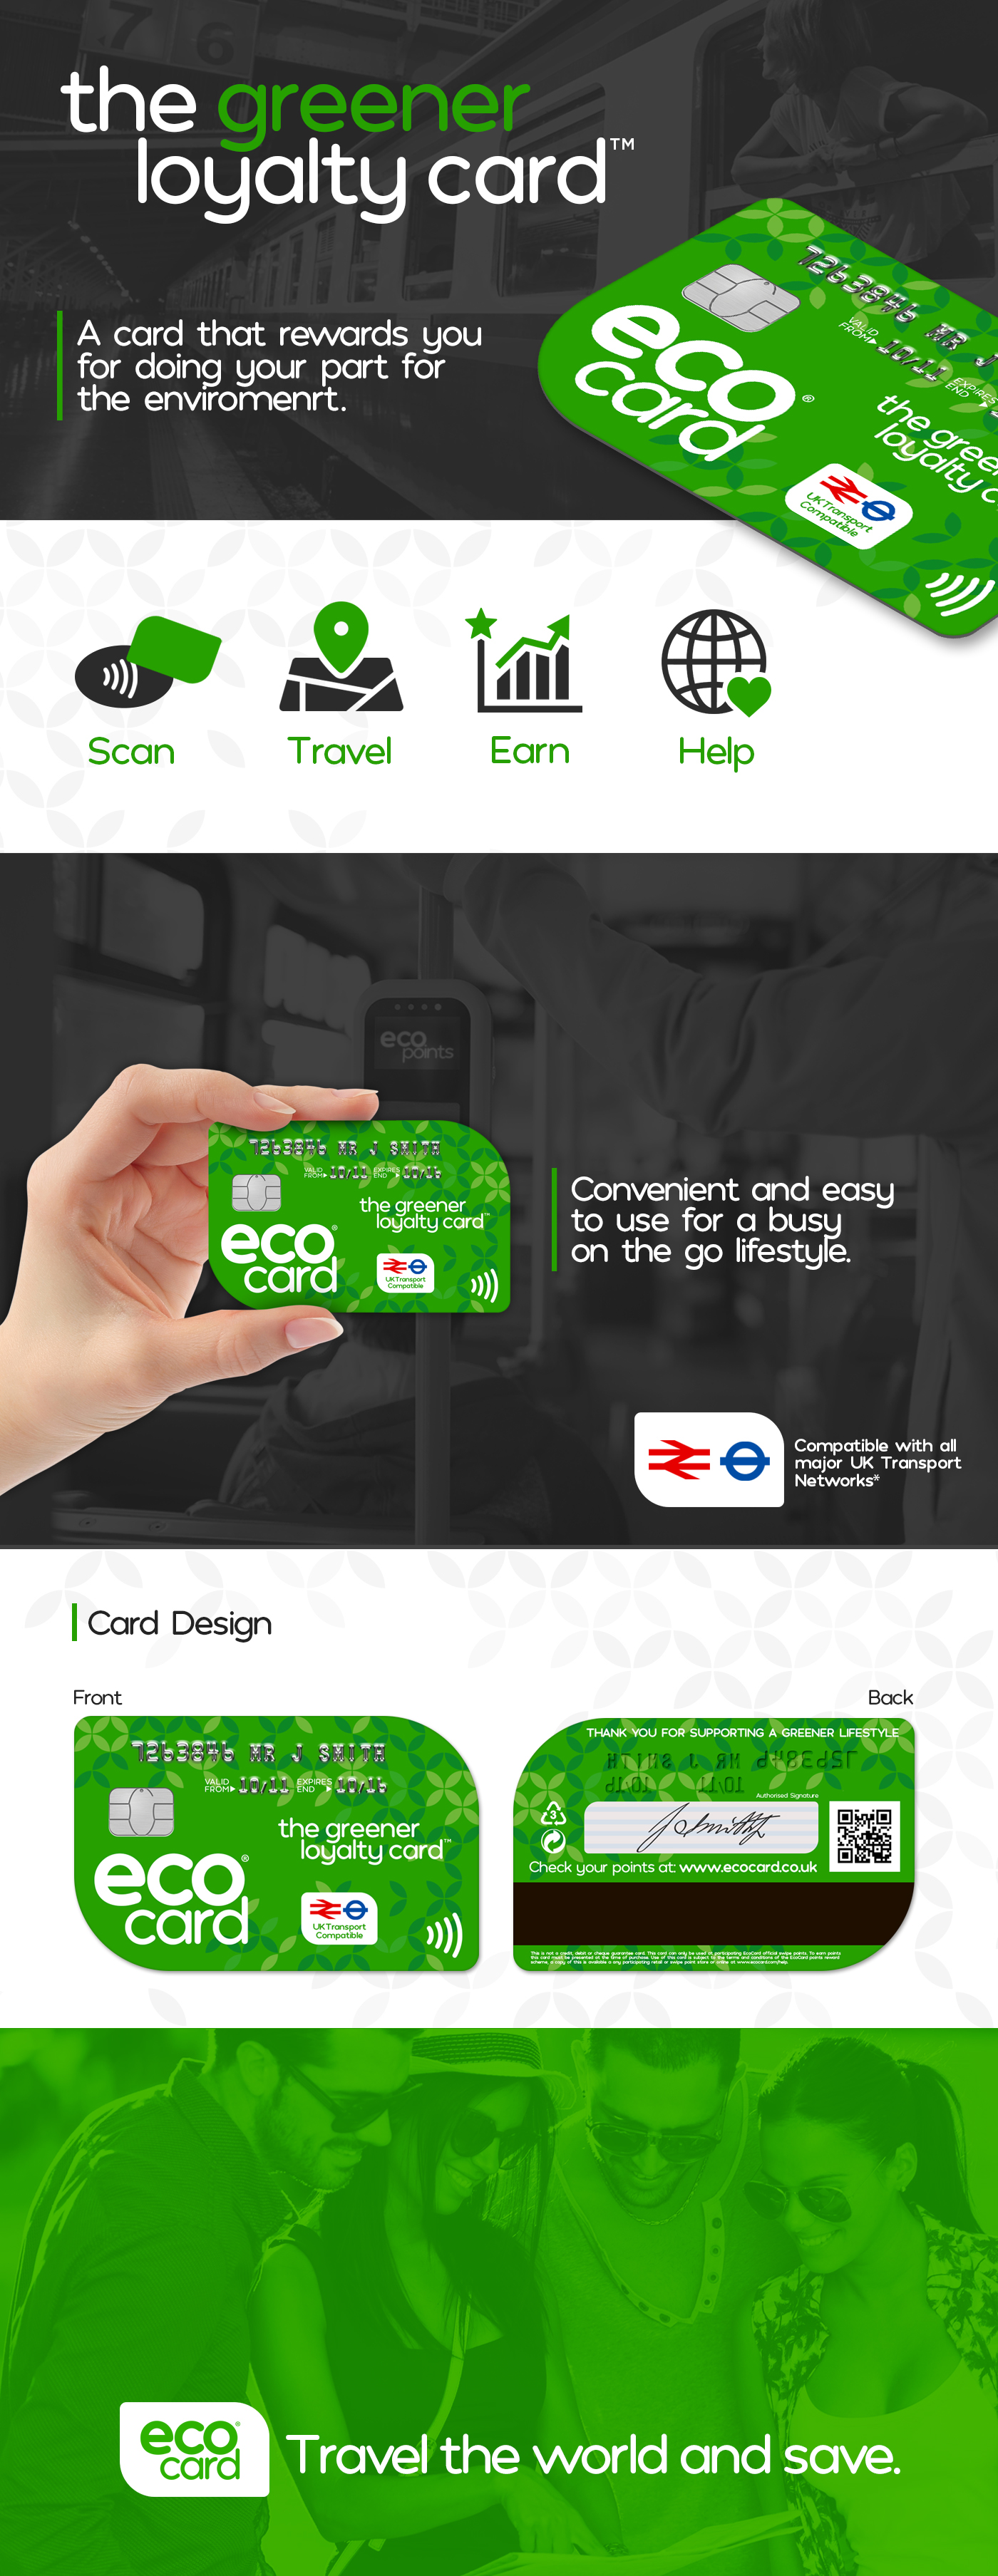 branding  card enviroment eco product saving money Transport Travel